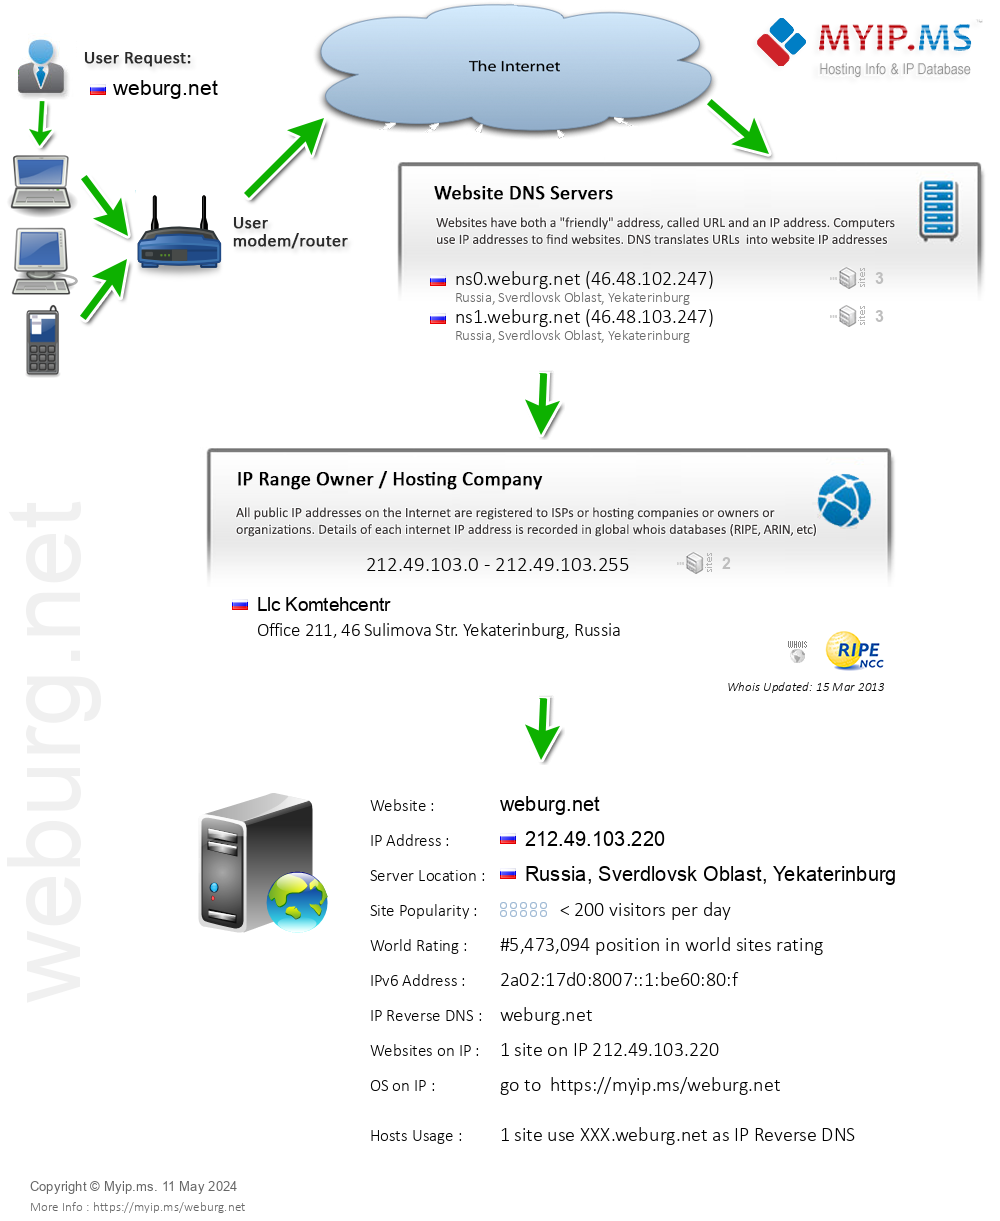 Weburg.net - Website Hosting Visual IP Diagram